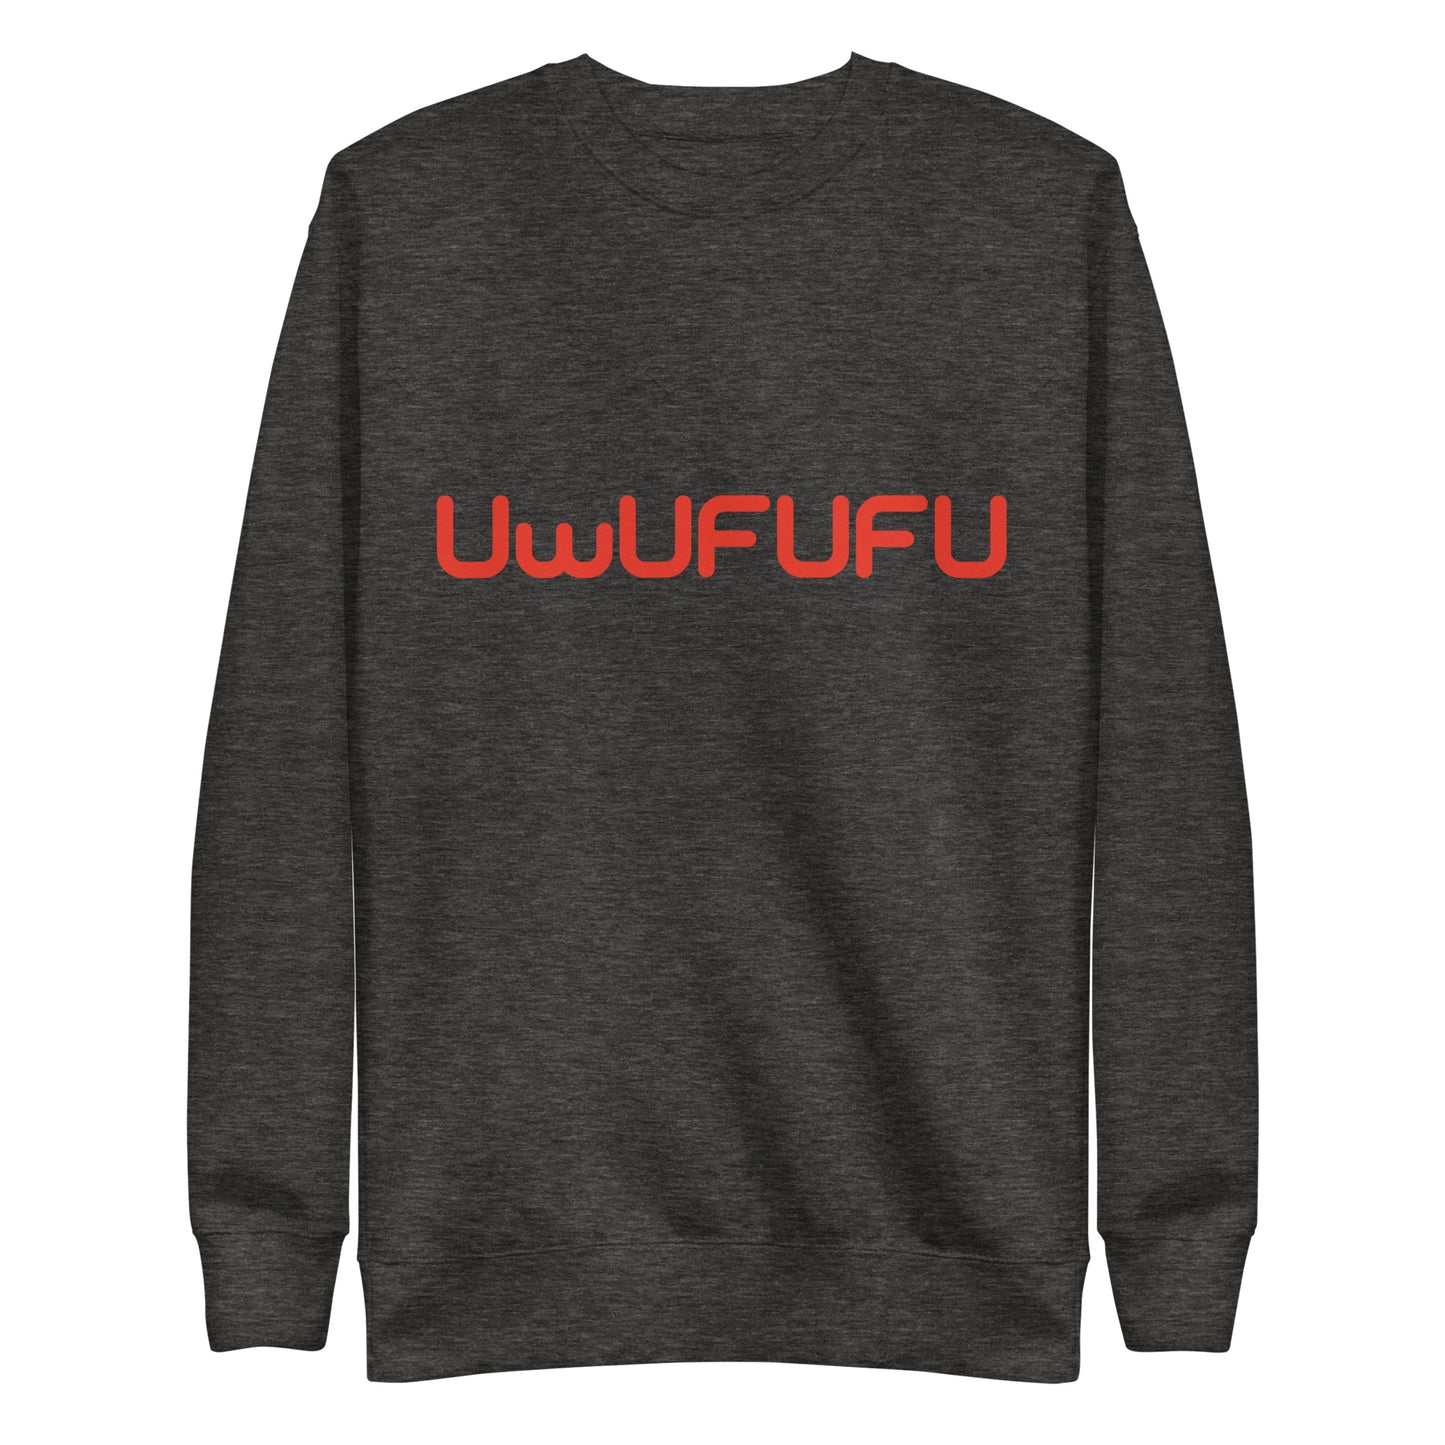 UwUFUFU Large Logo Unisex Premium Sweatshirt